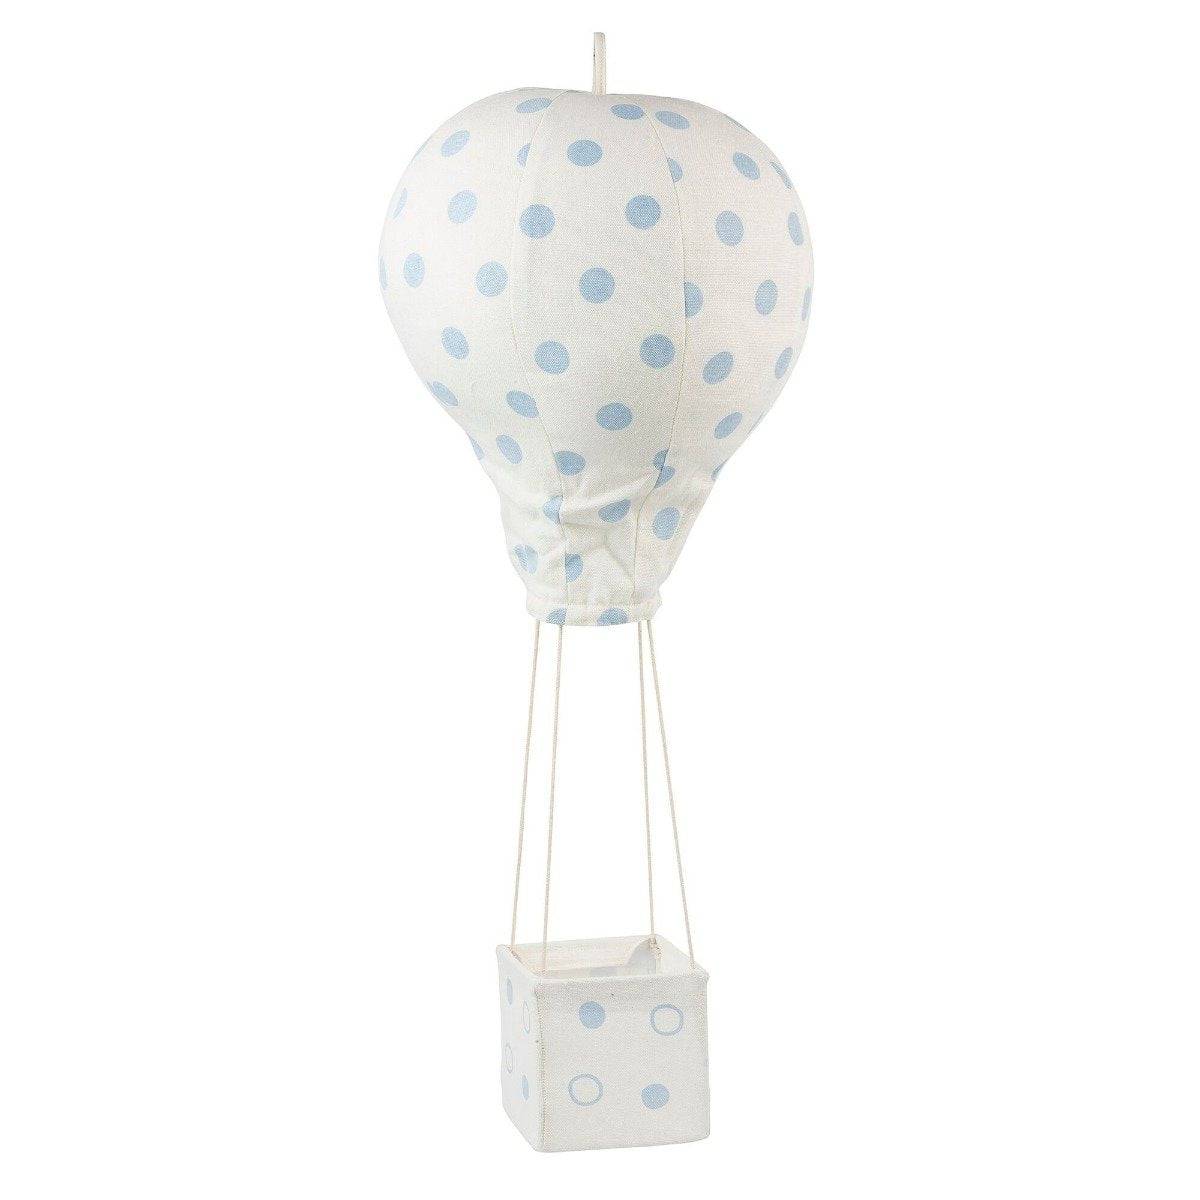 Lil' Polka Dot Hot Air Balloon Mobile in Light Blue - Twinkle Twinkle Little One